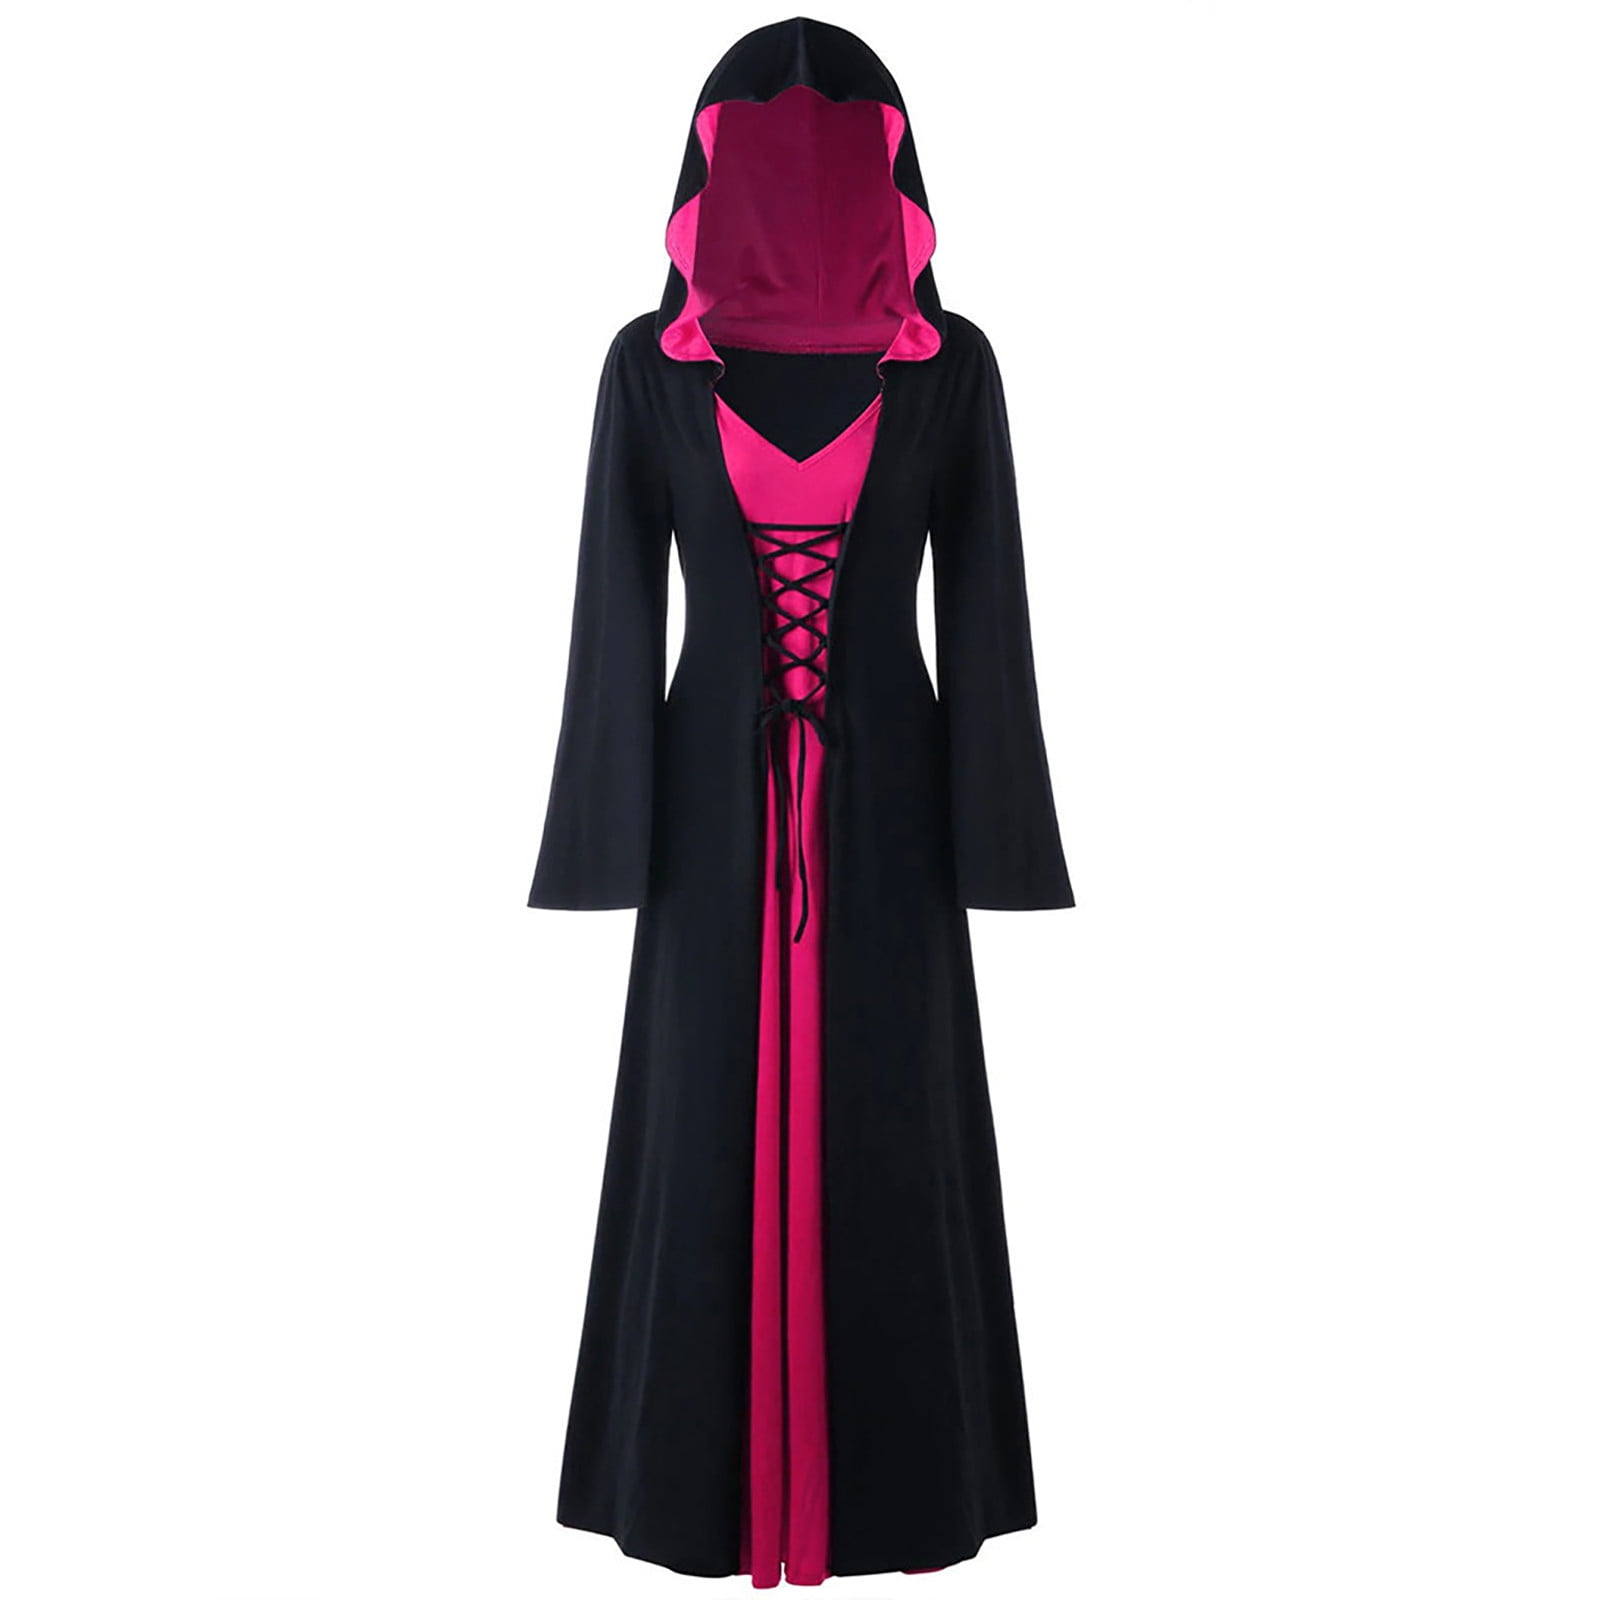 Women's Gothic Hooded Cloak Wedding Floor Length Long Cape Cosplay Costume Dress 